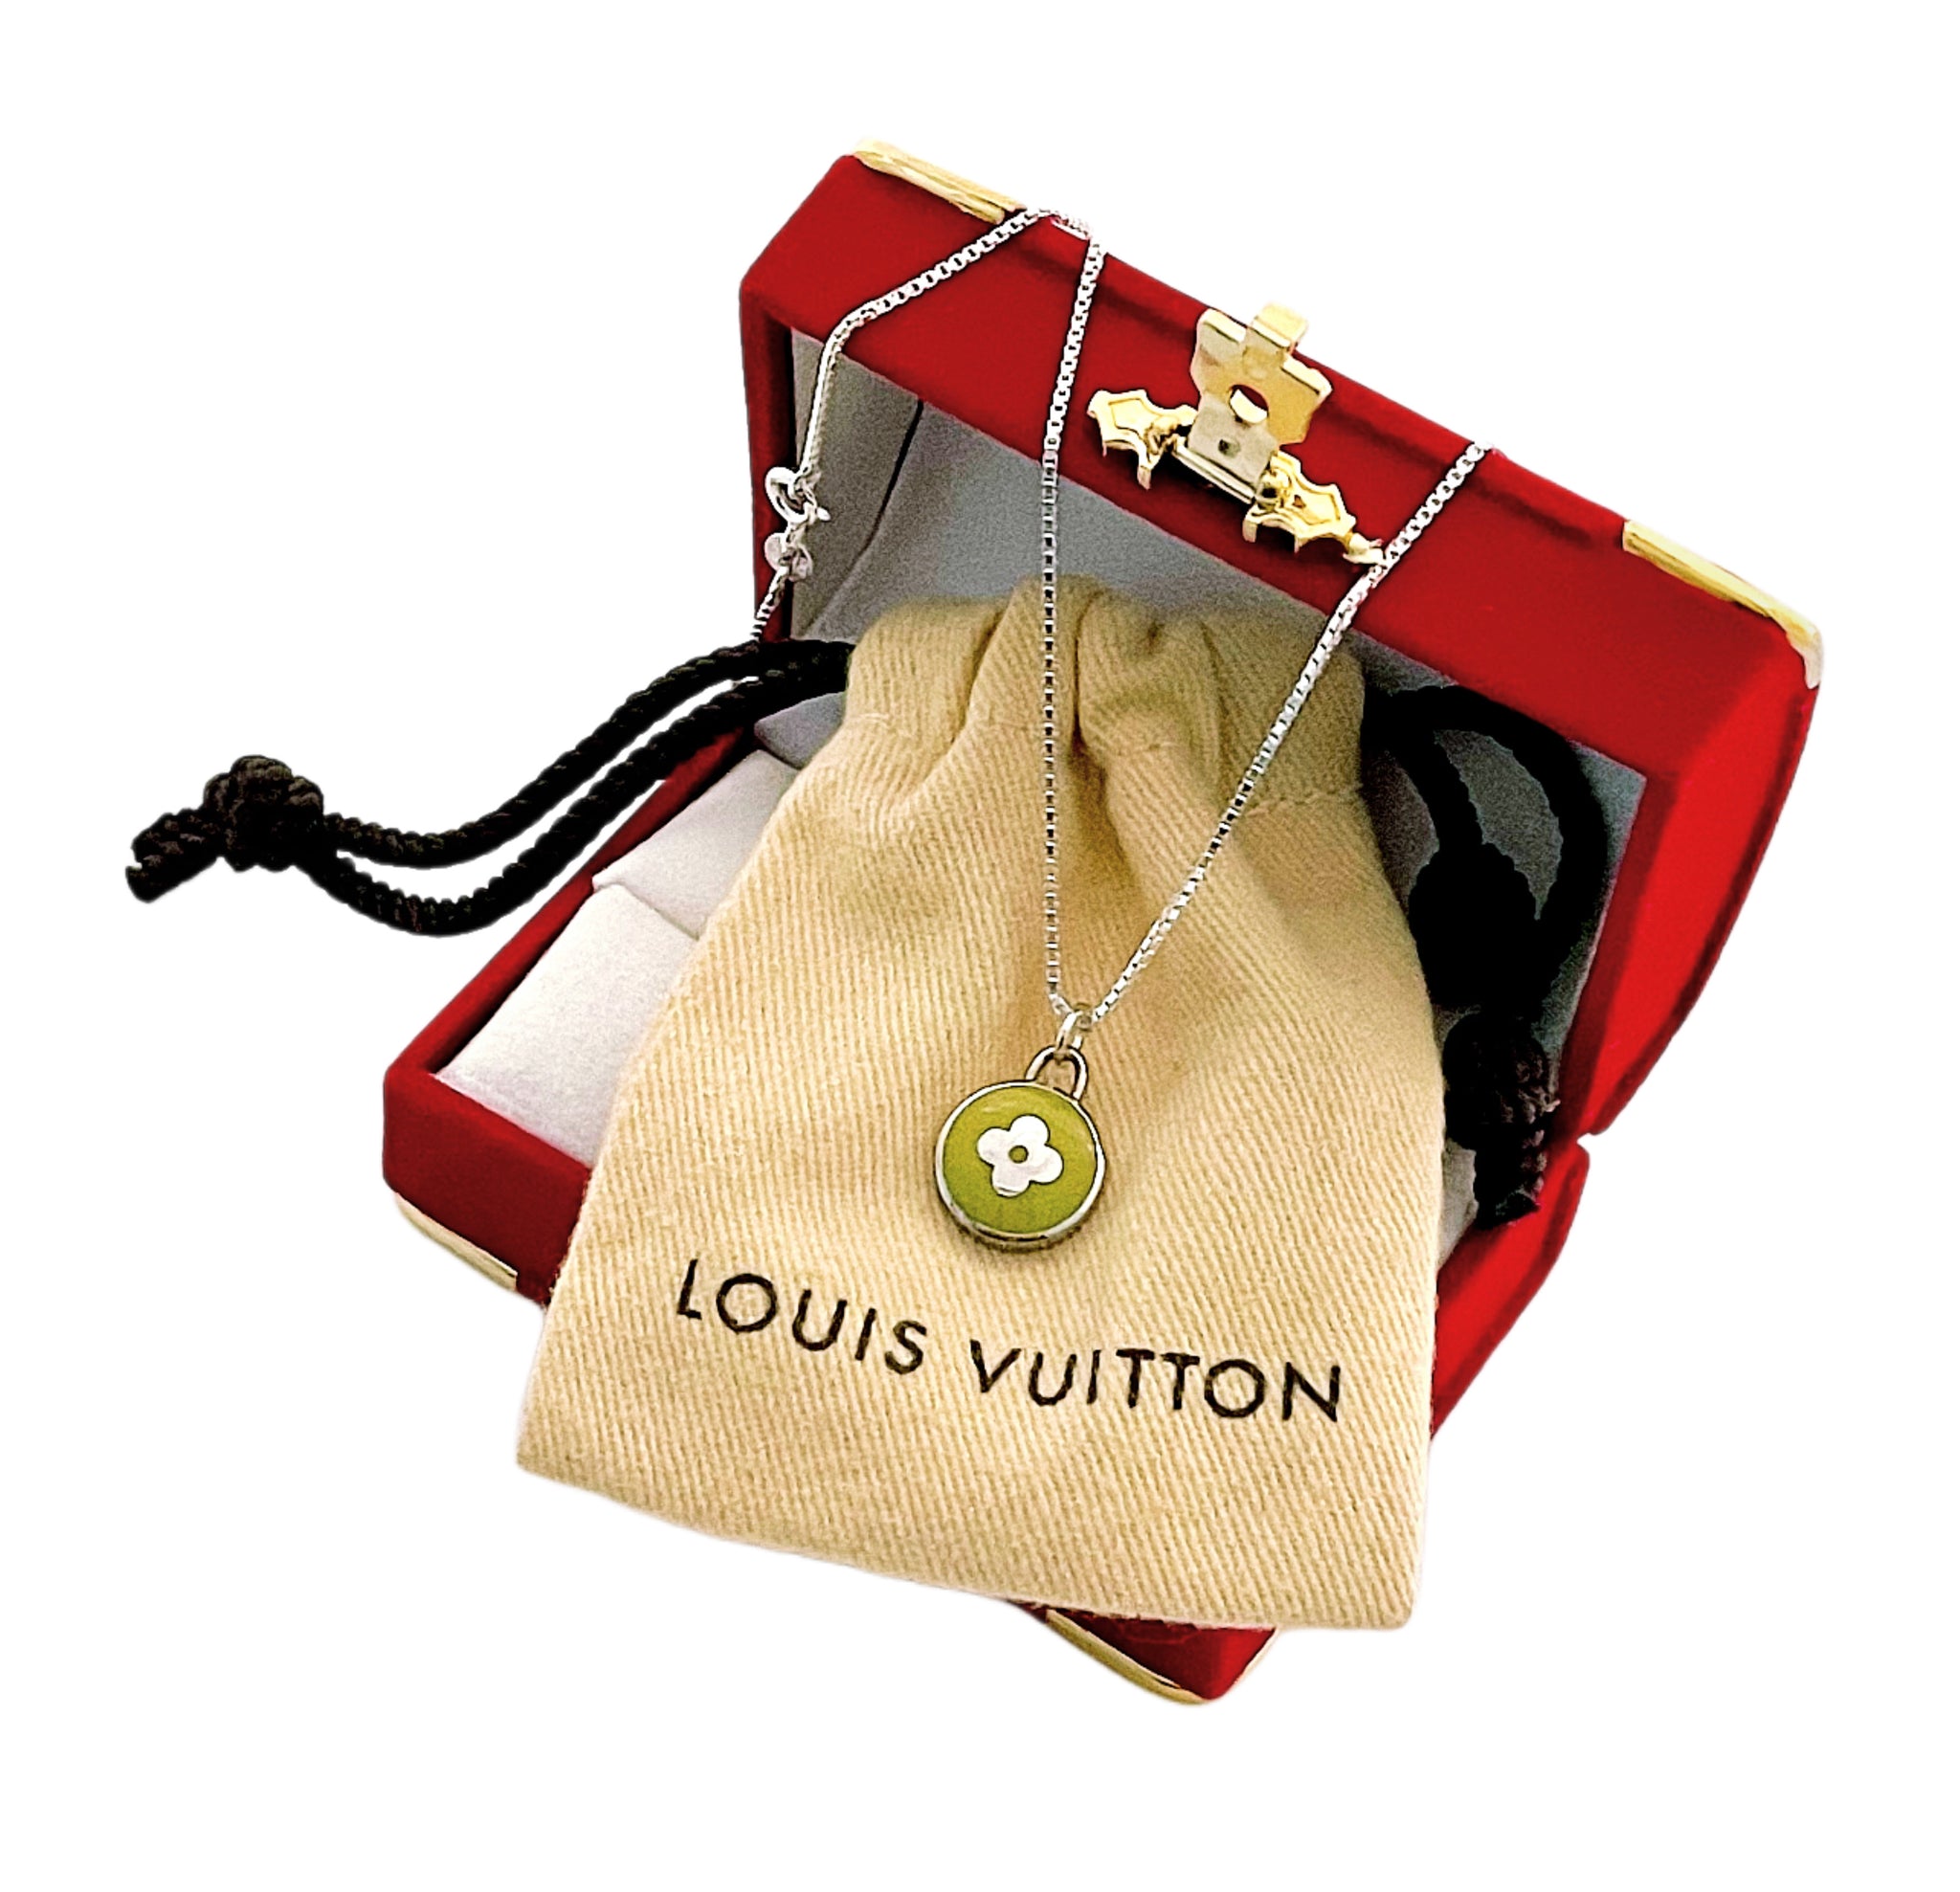 Authentic Louis Vuitton Repurposed Silver Trunks & Bags Necklace